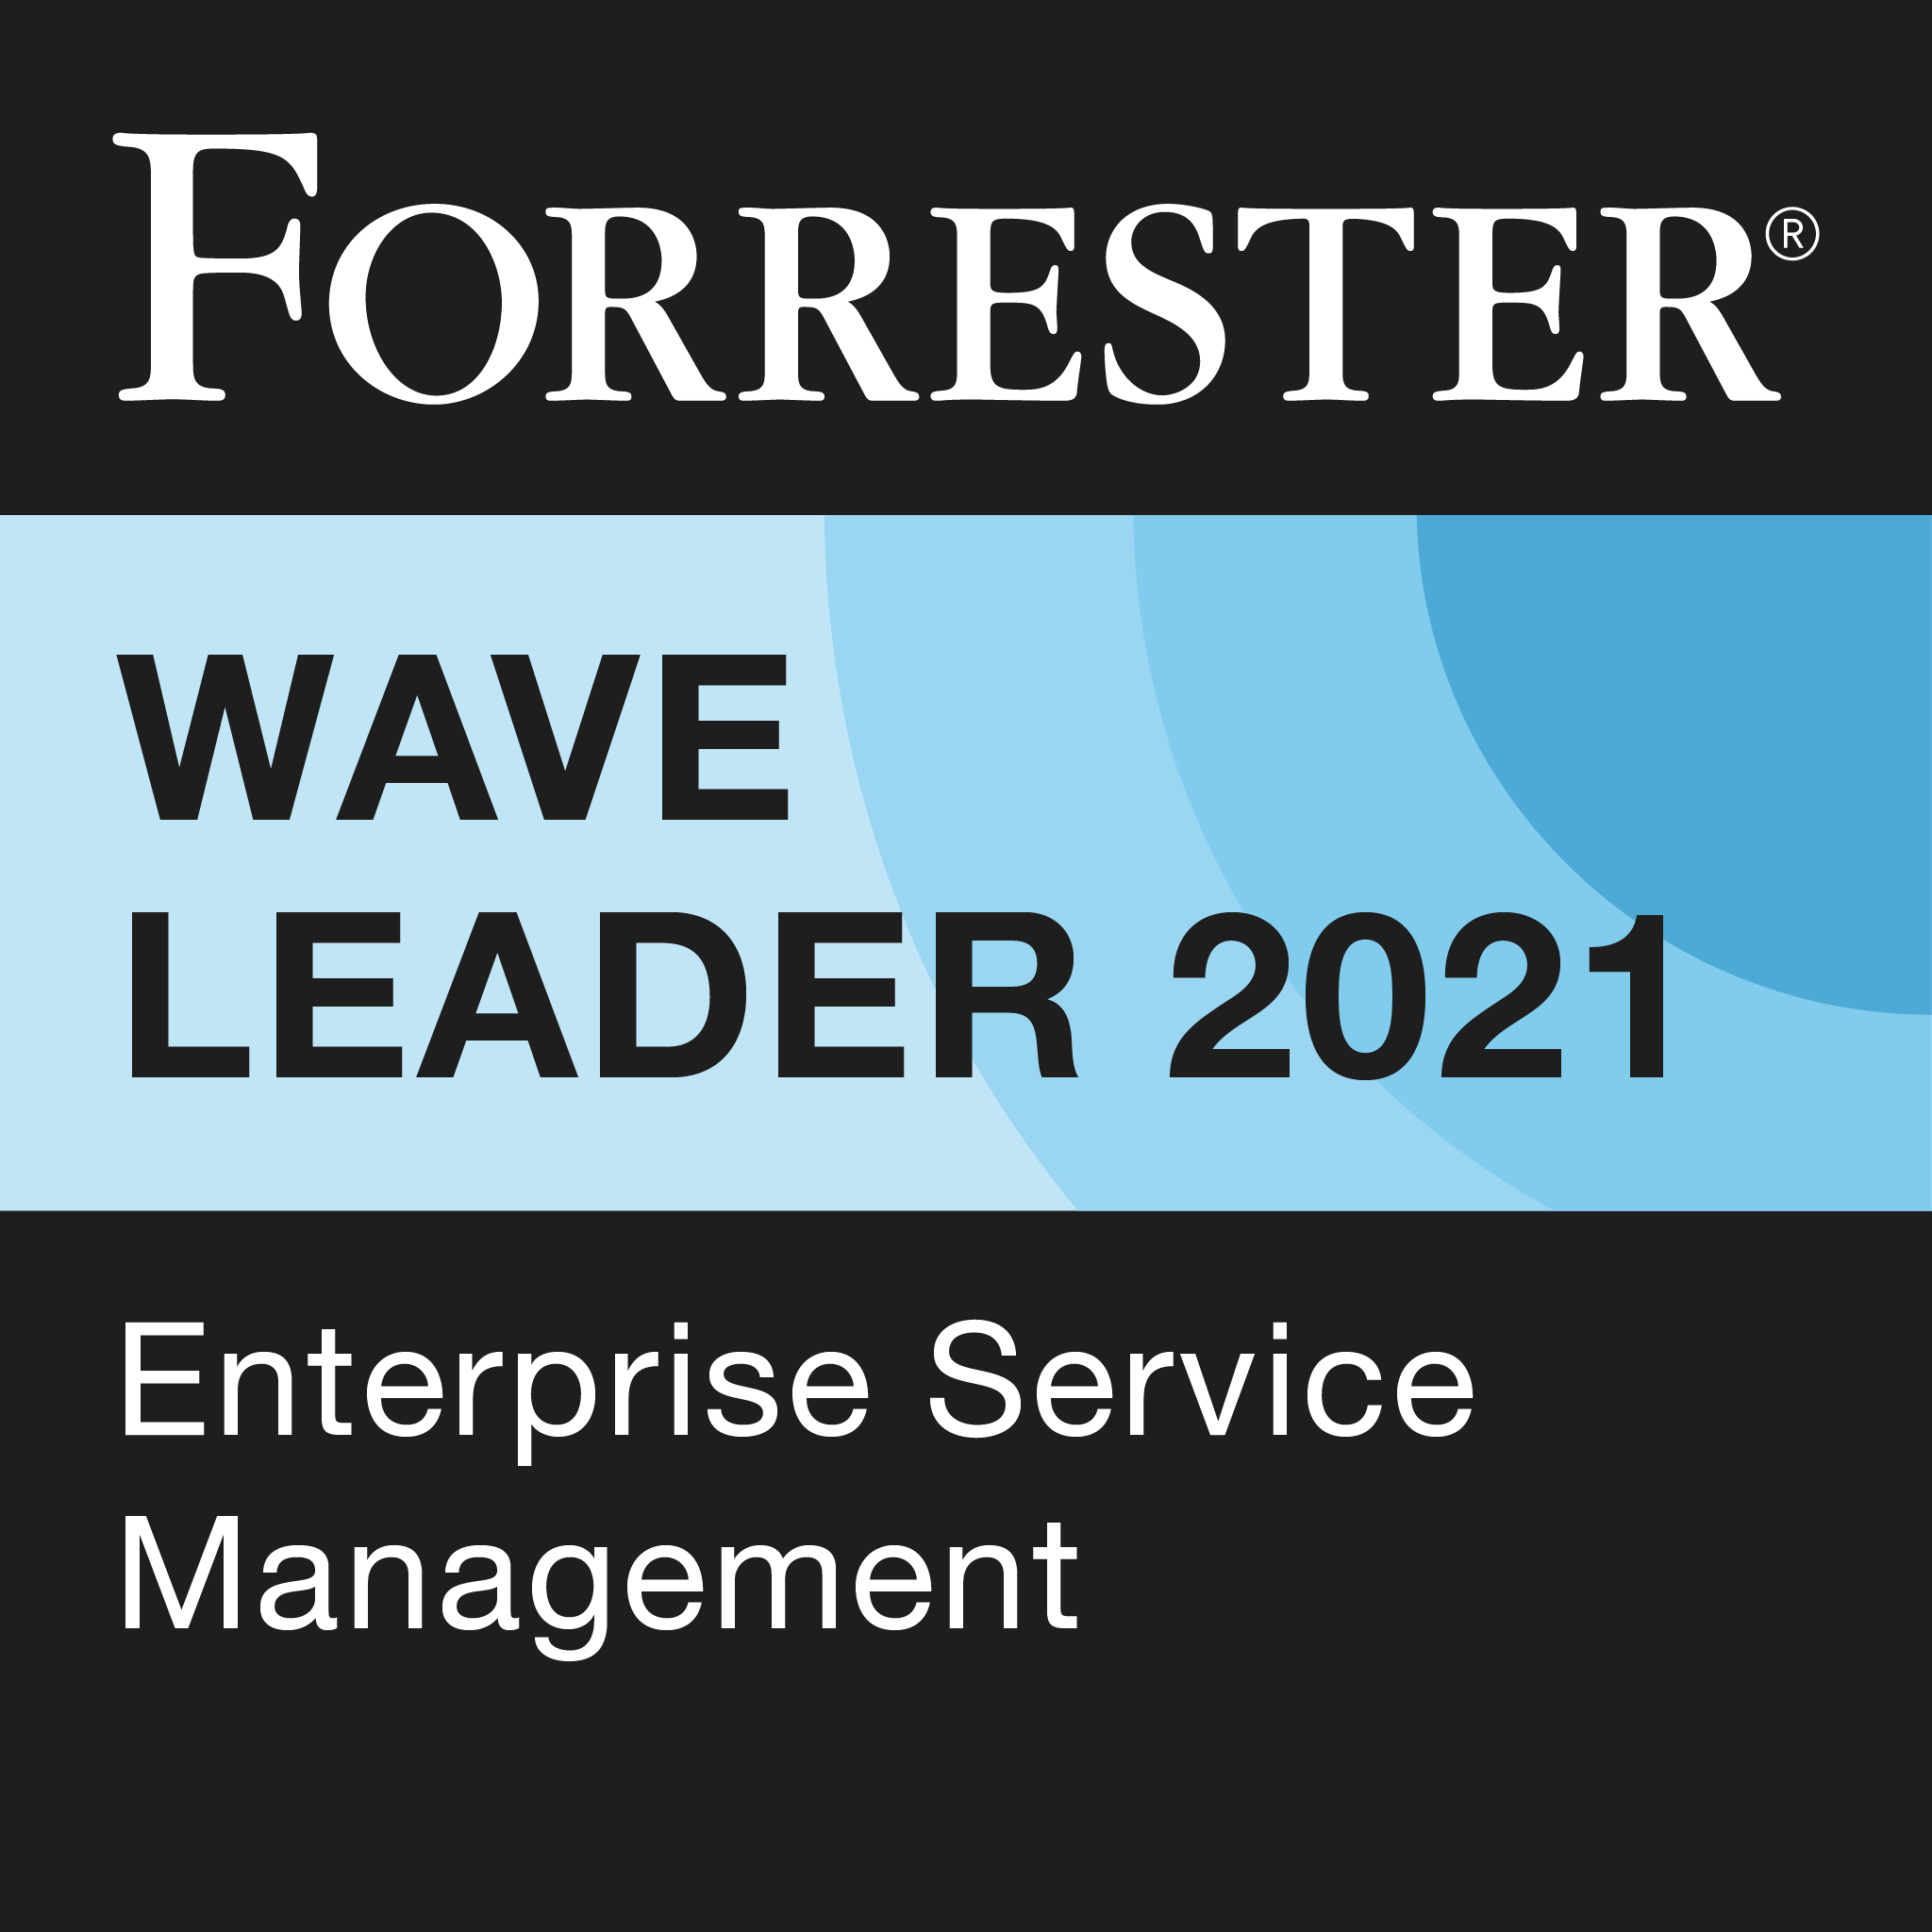 Forrester Wave에서 2021 엔터프라이즈 서비스 관리의 리더로 선정